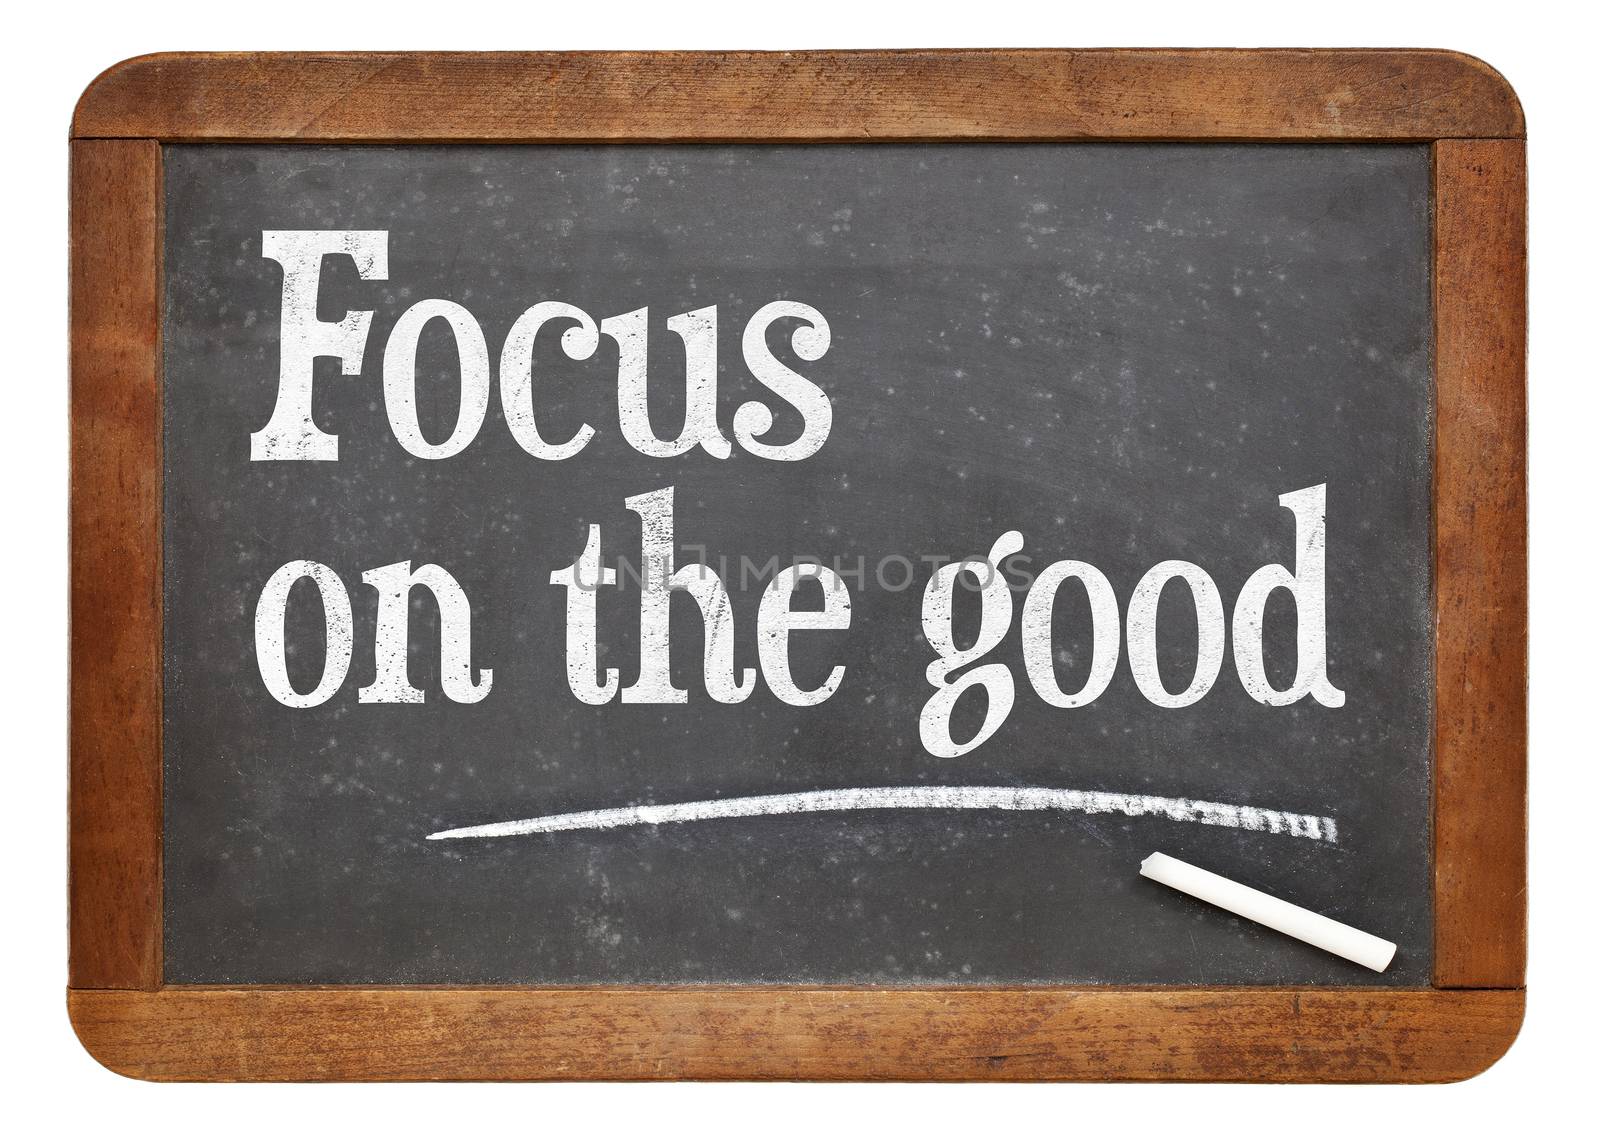 Focus on the good - positivity concept by PixelsAway